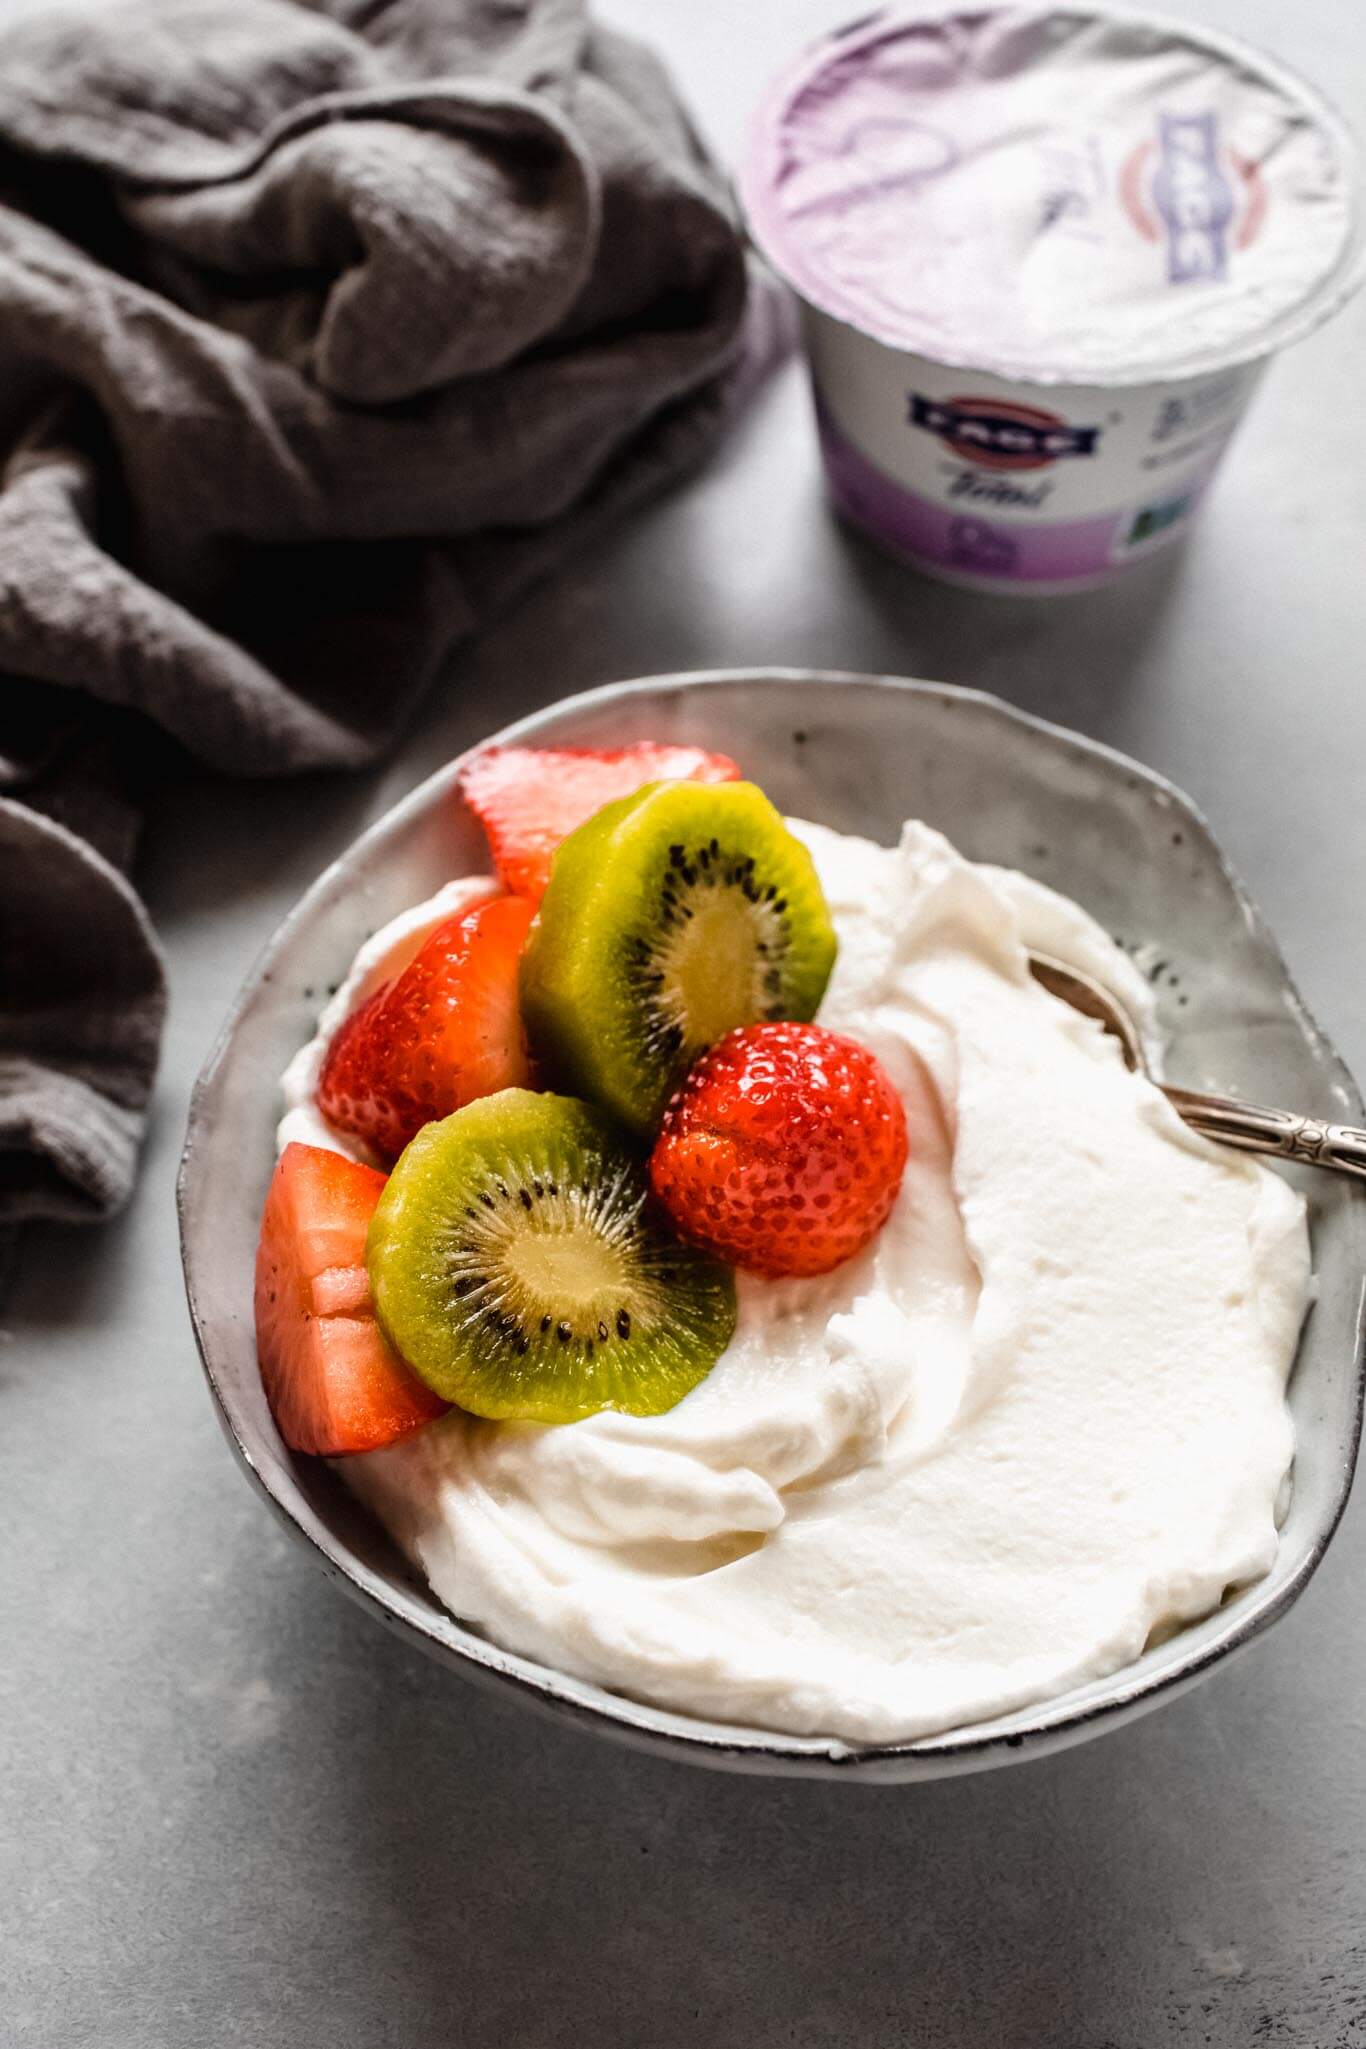 Yogurt topped with kiwi & strawberries.